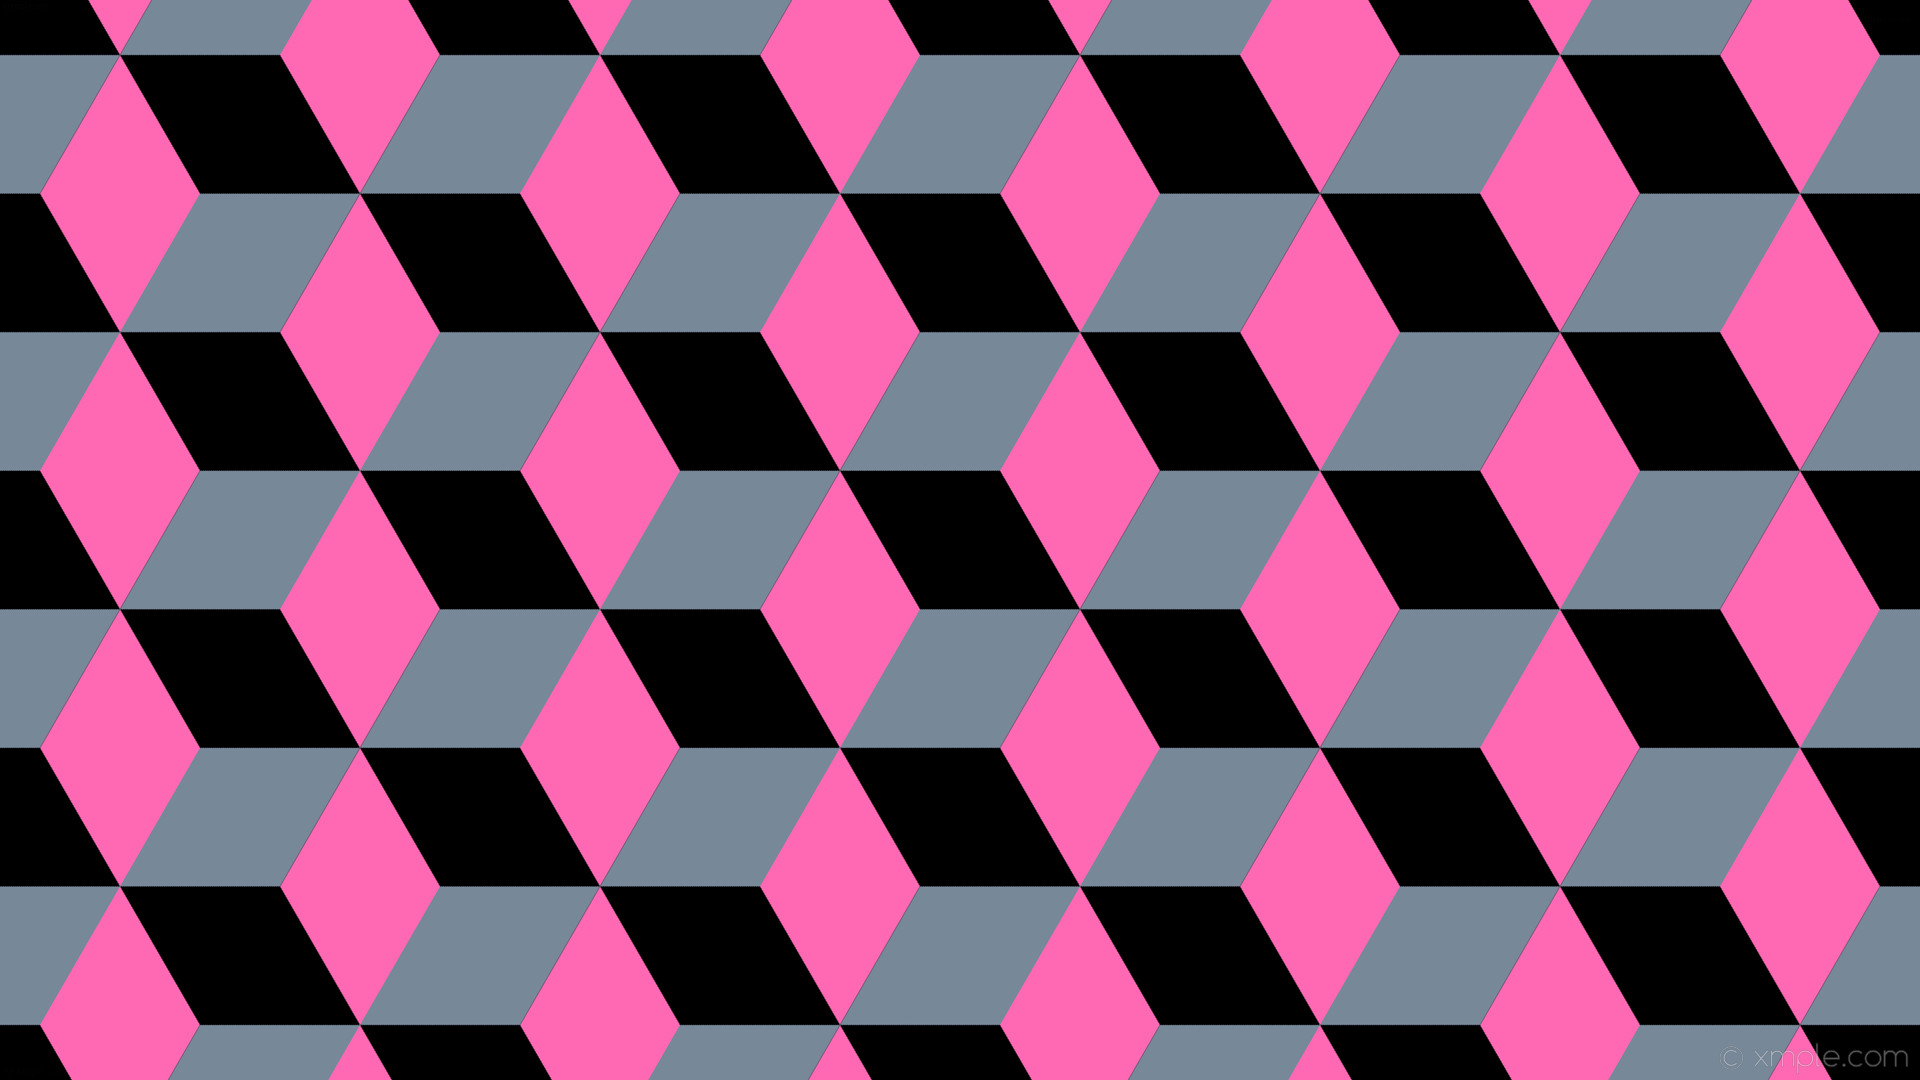 1920x1080 wallpaper pink 3d cubes grey black hot pink light slate gray #000000  #ff69b4 #